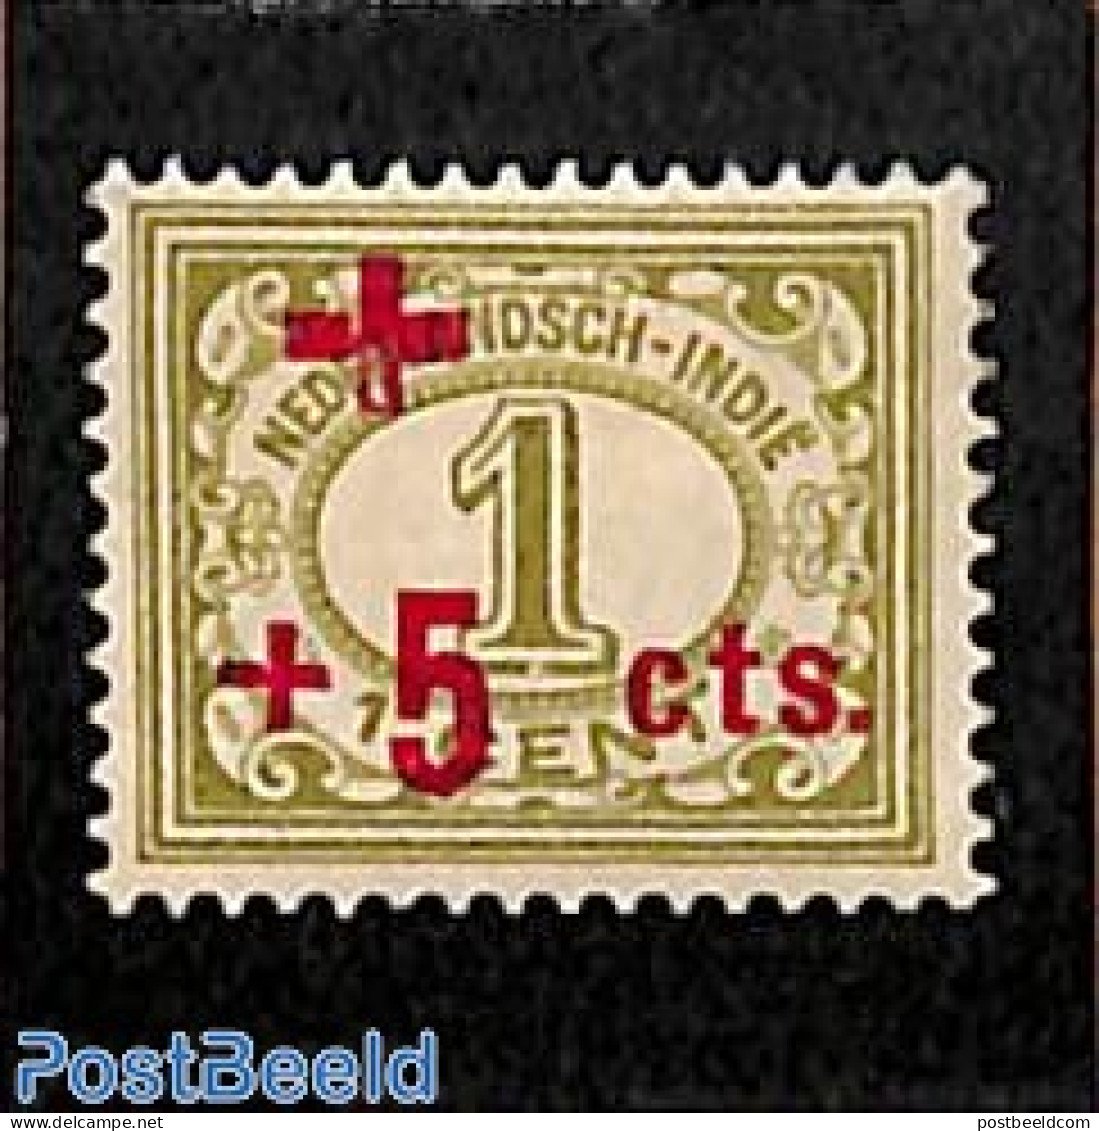 Netherlands Indies 1915 +5c, Stamp Out Of Set, Unused (hinged), Health - Red Cross - Rotes Kreuz